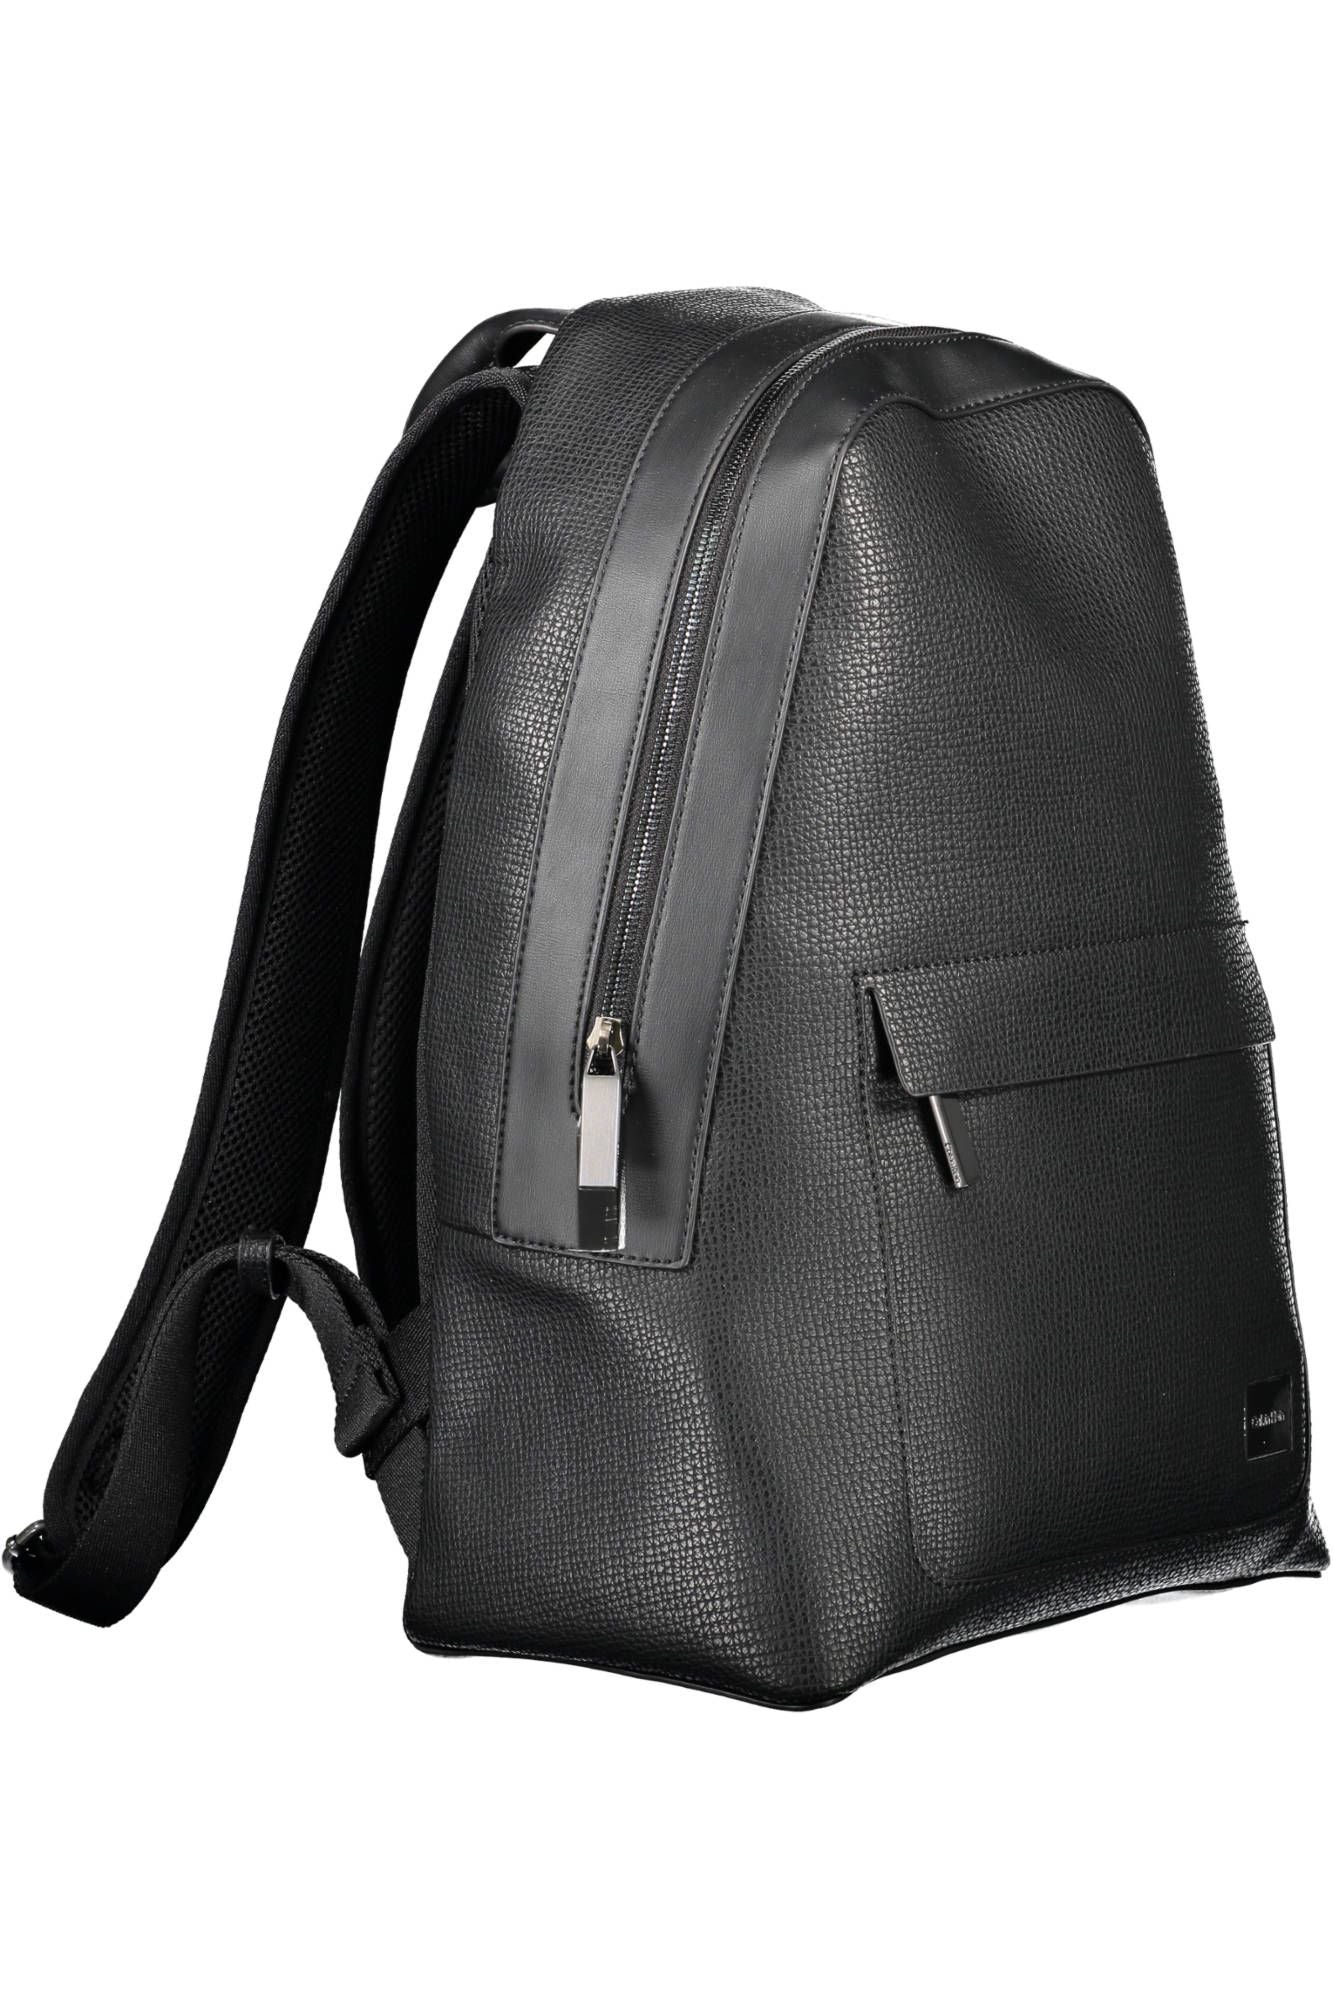 Sleek Urban Backpack with Adjustable Straps